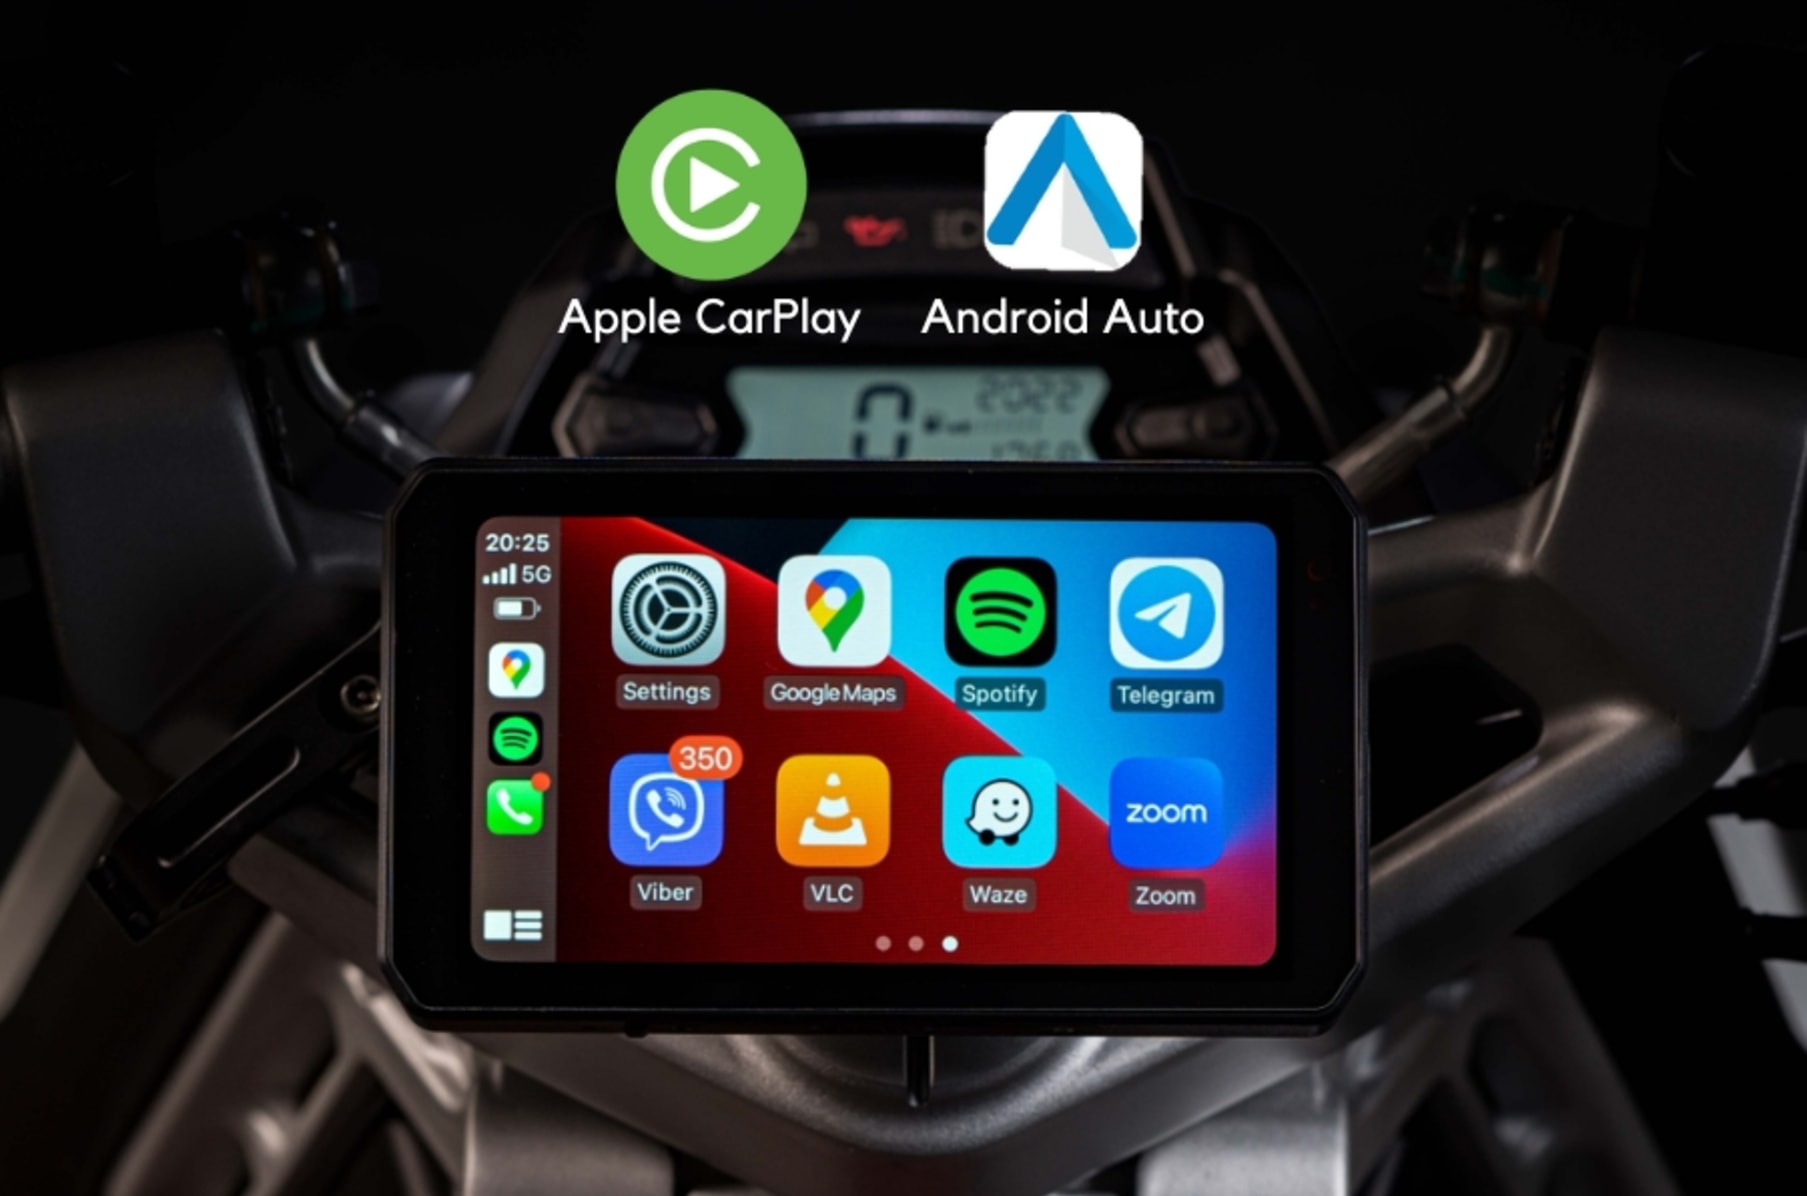 Motorcycle Carplay Android Auto Motorbike Smart Dashboard Display